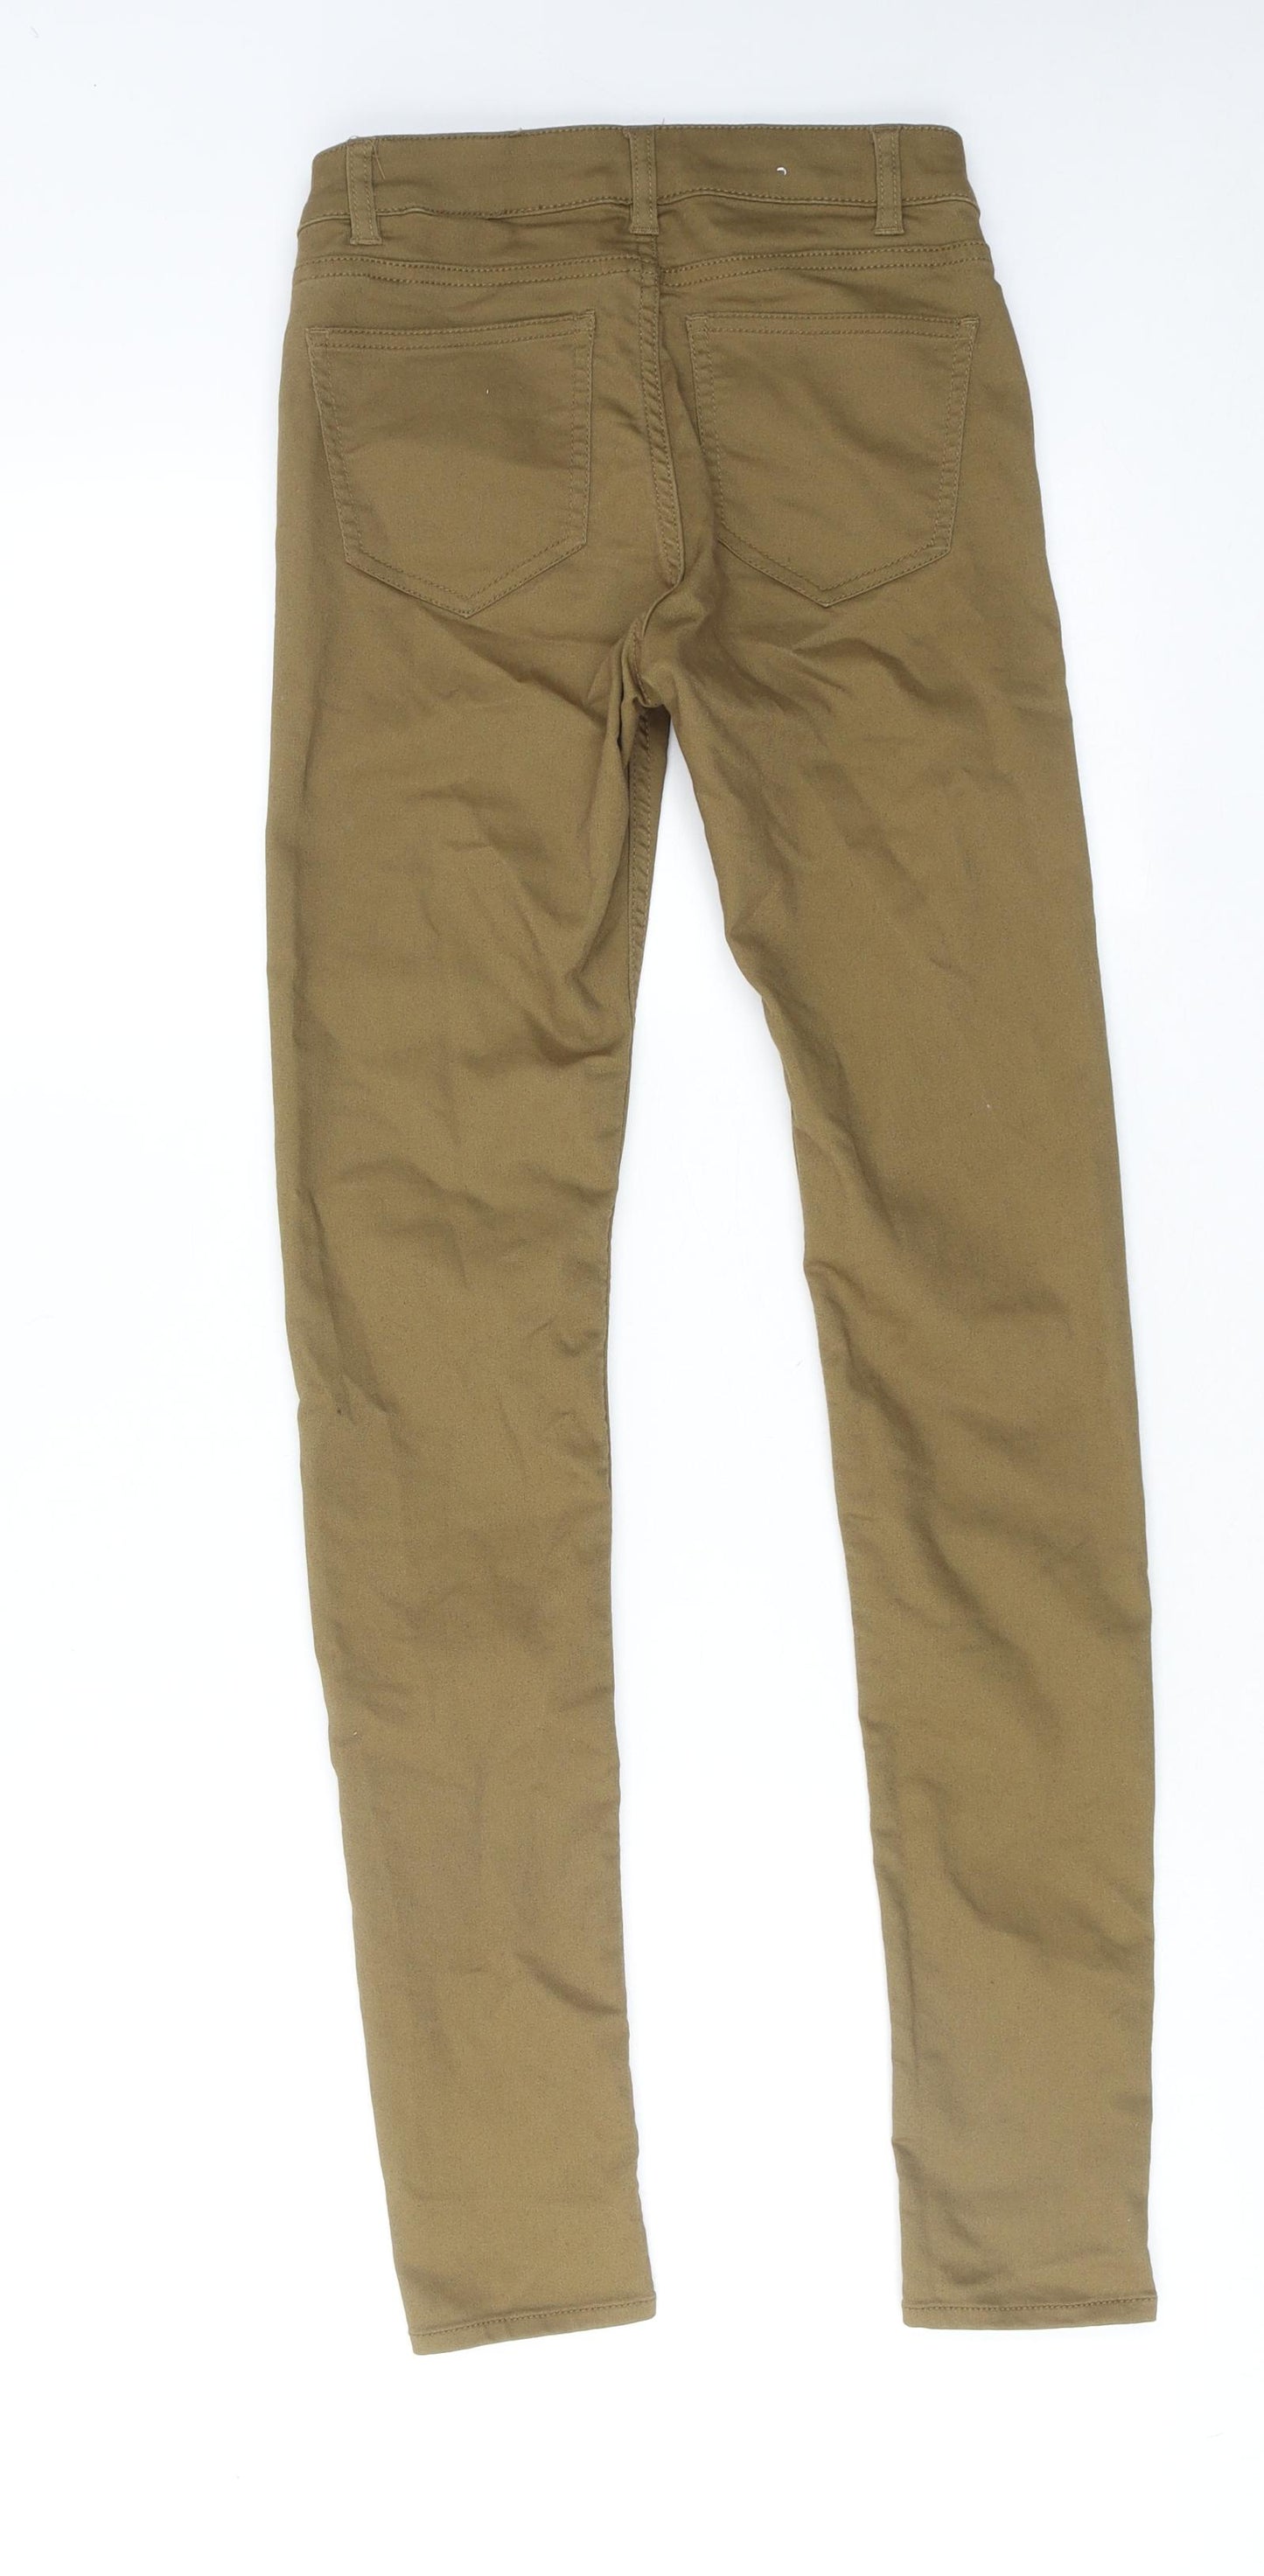 H&M Womens Brown Cotton Skinny Jeans Size 4 Regular Zip